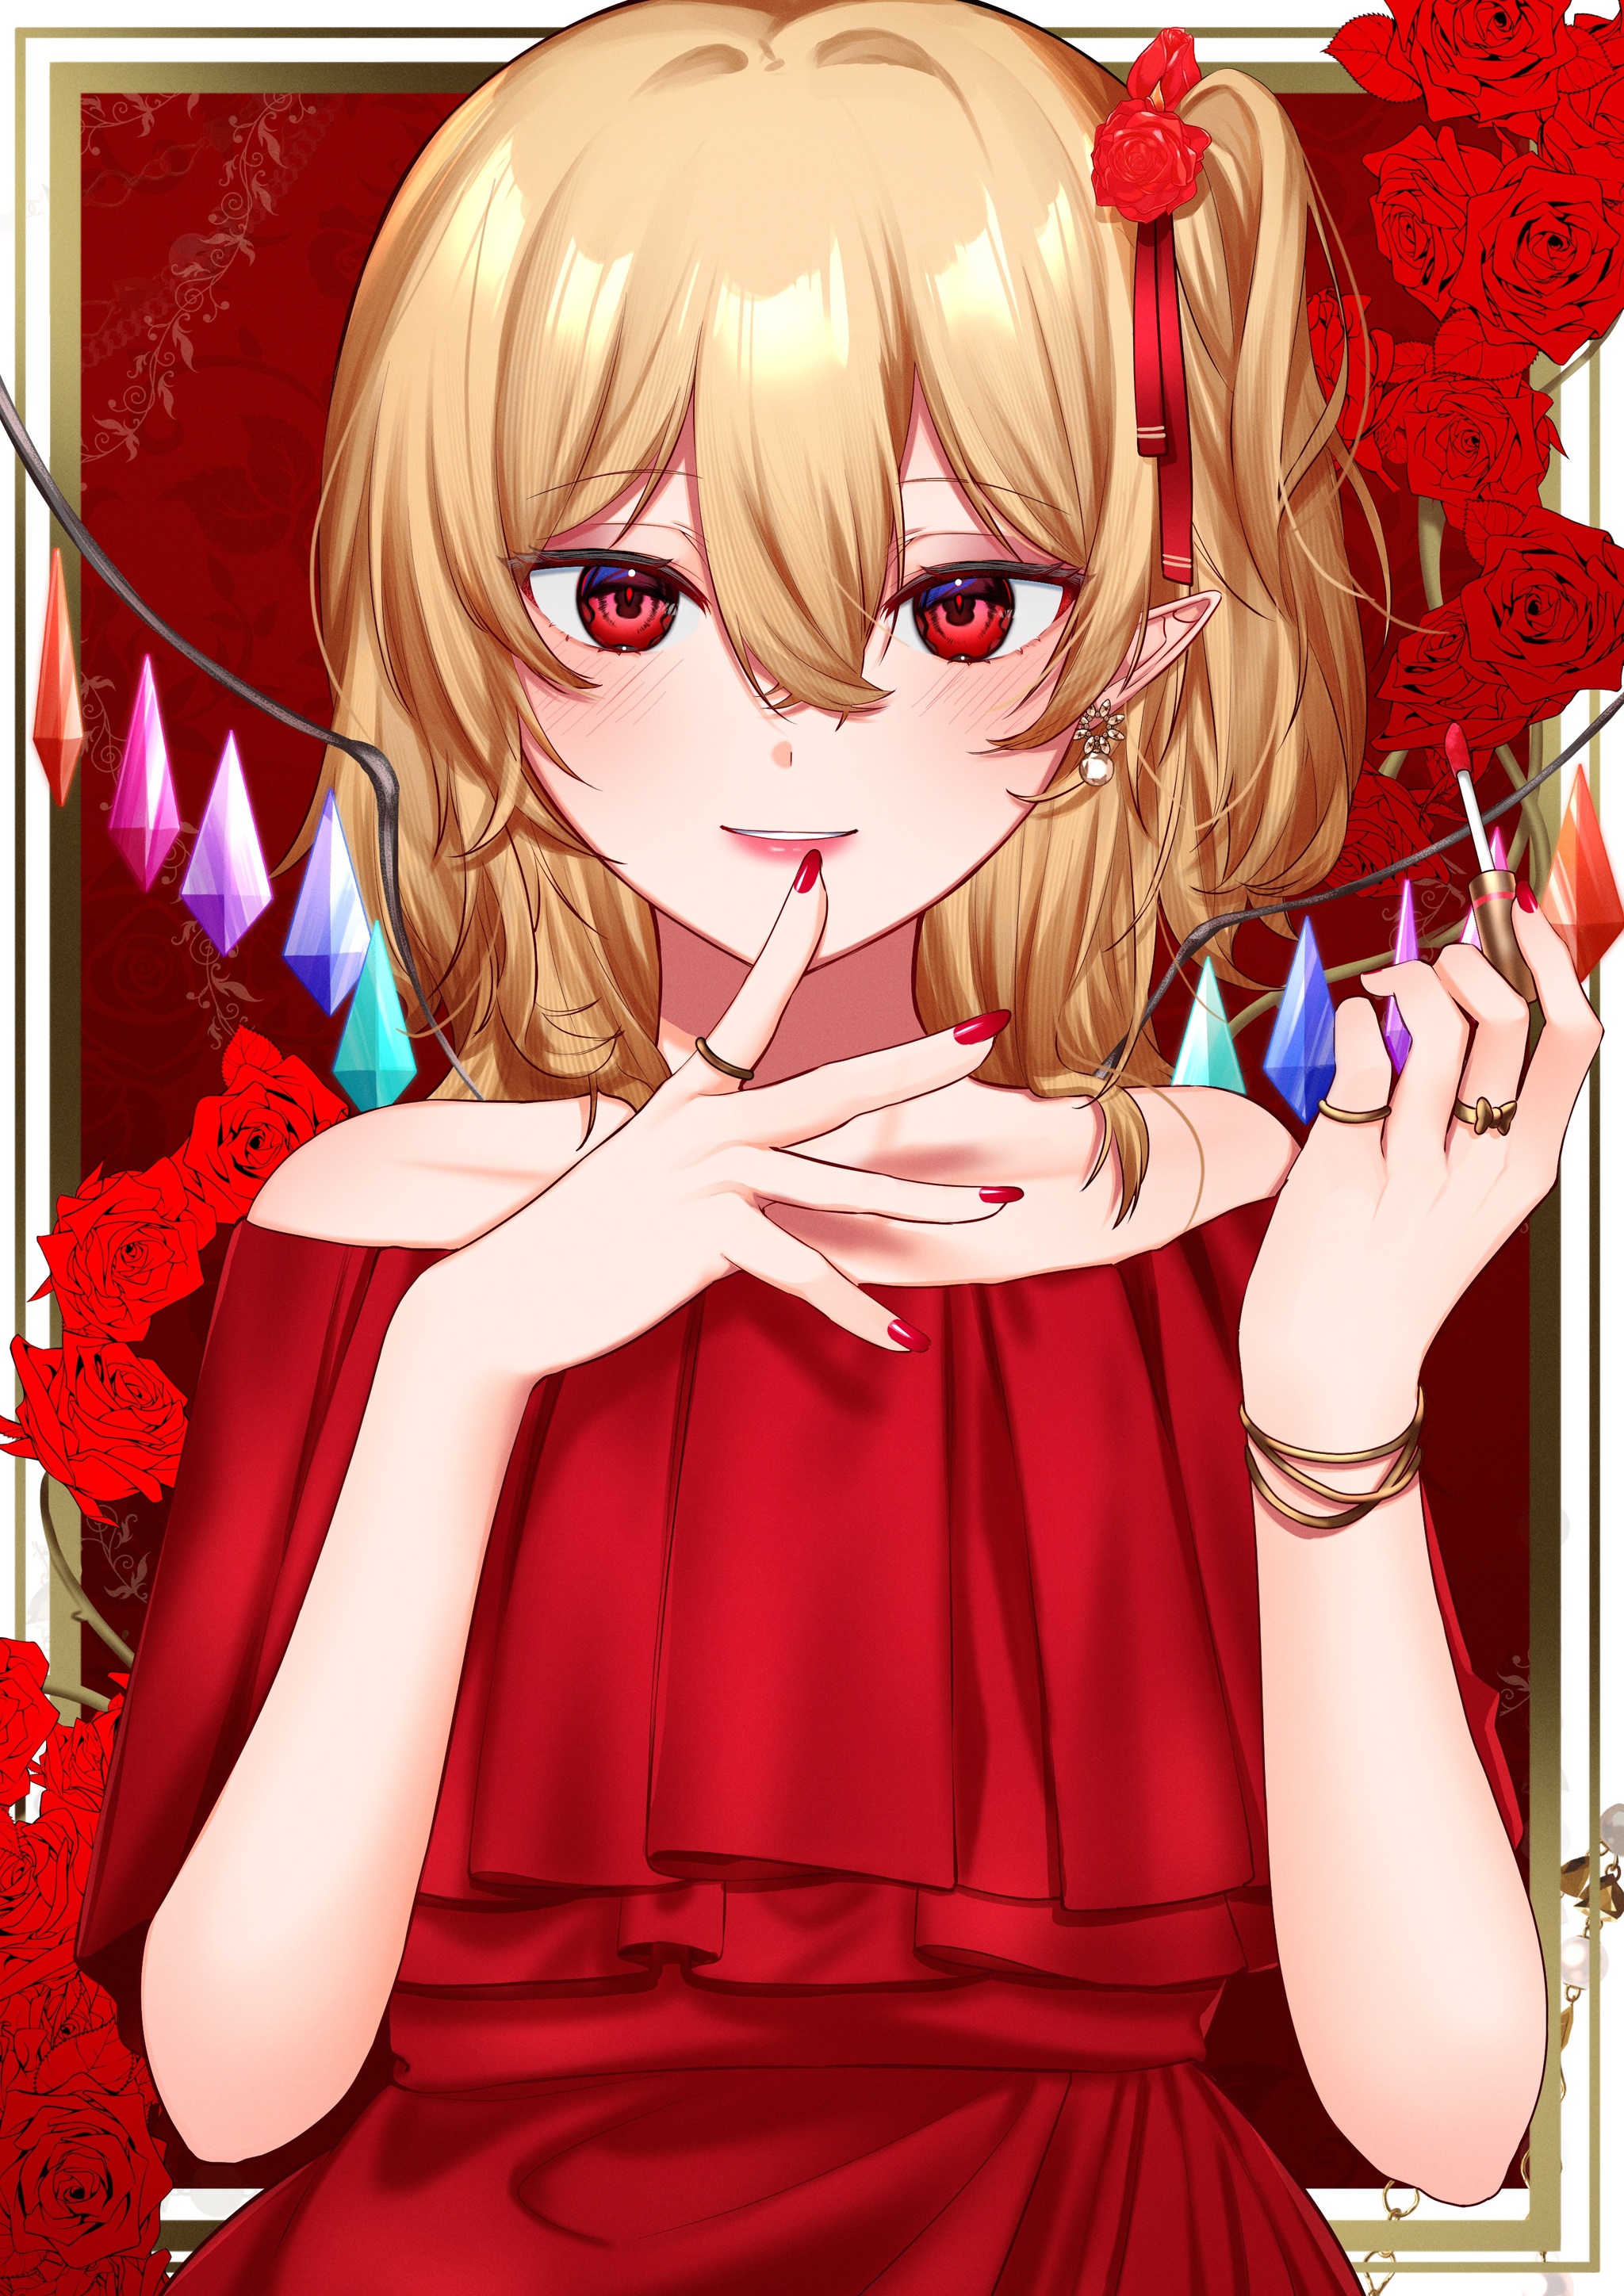 Scarlet Sisters - Longpost, Anime, Anime art, Art, Flandre scarlet, Remilia scarlet, Touhou